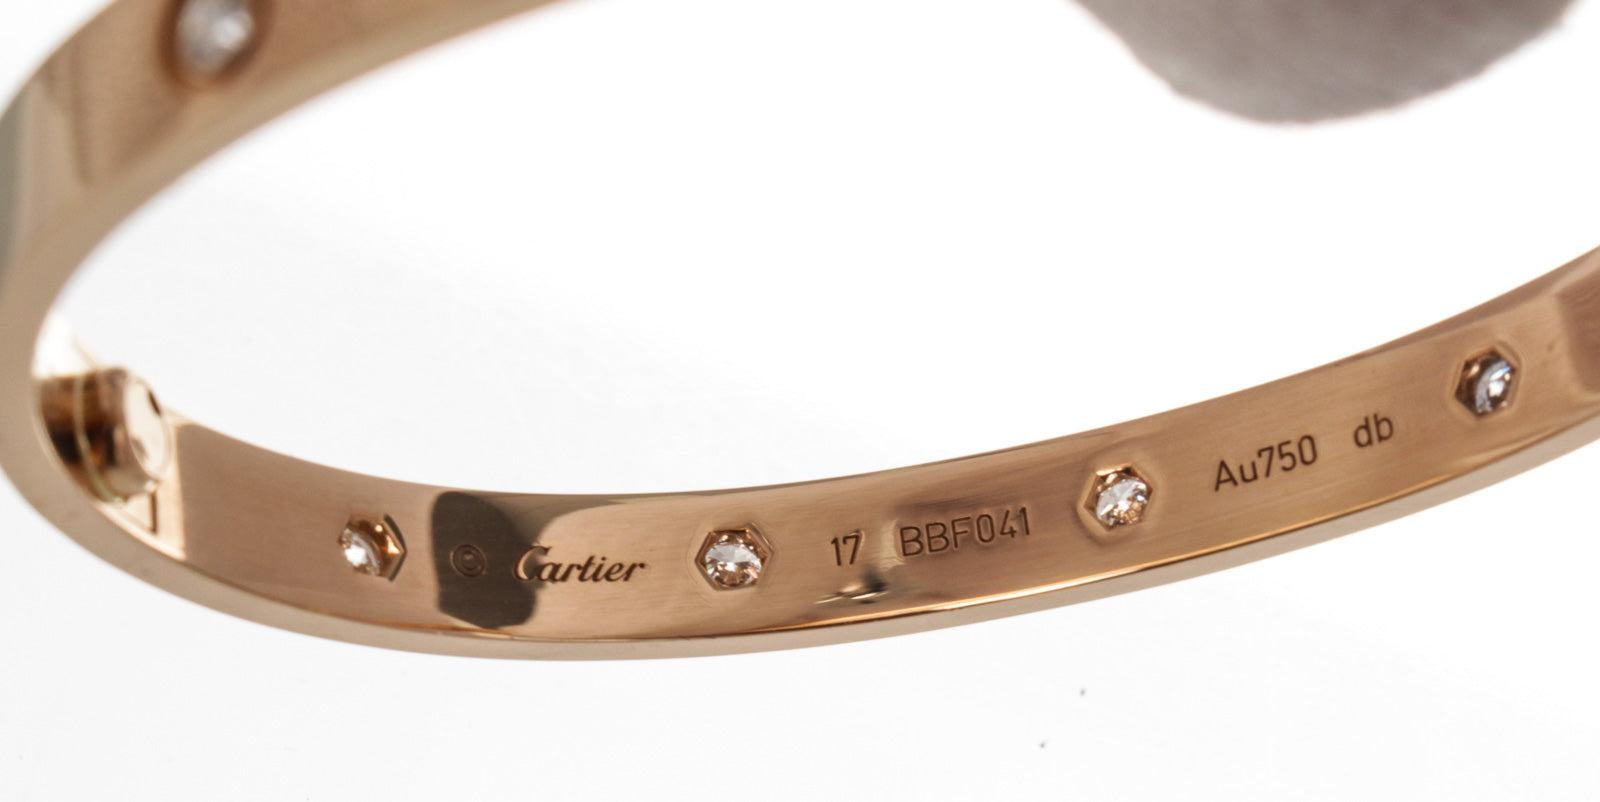 Cartier Rose Gold Love Bracelet with gold-tone hardware. 

53814MSC